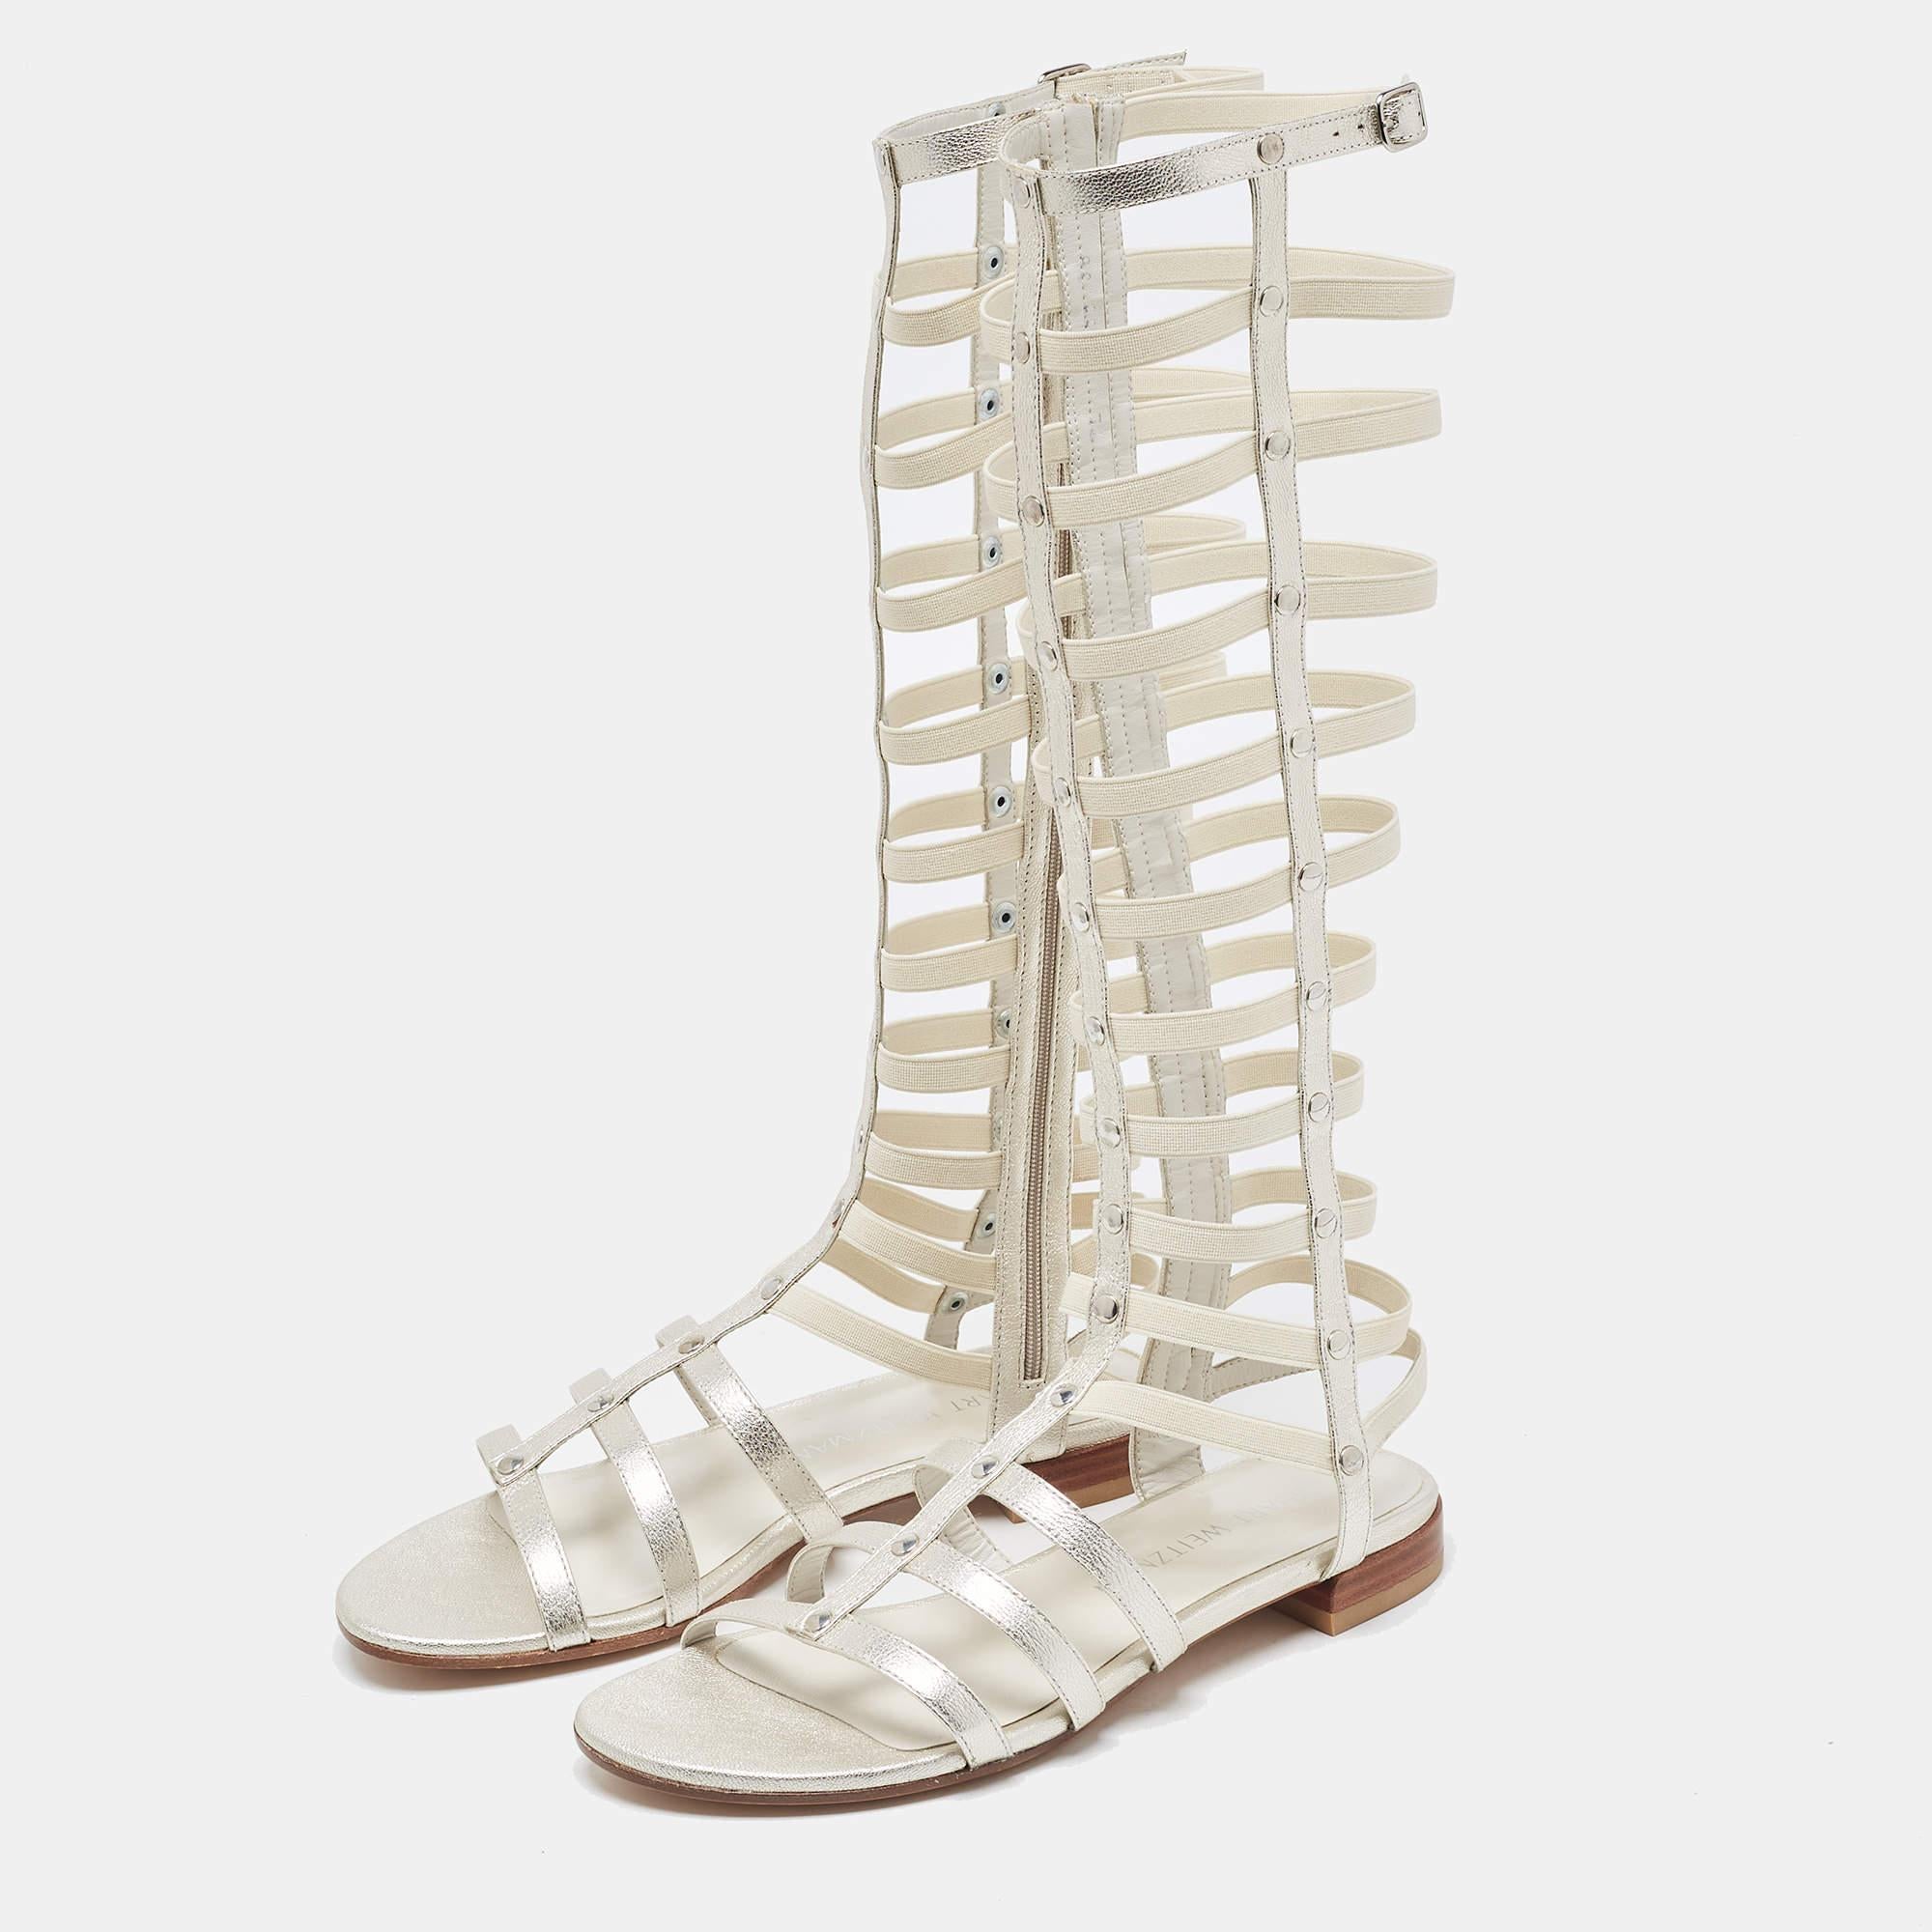 Stuart Weitzman Silver Leather And Elastic Gladiator Flat Sandals Size 36 3